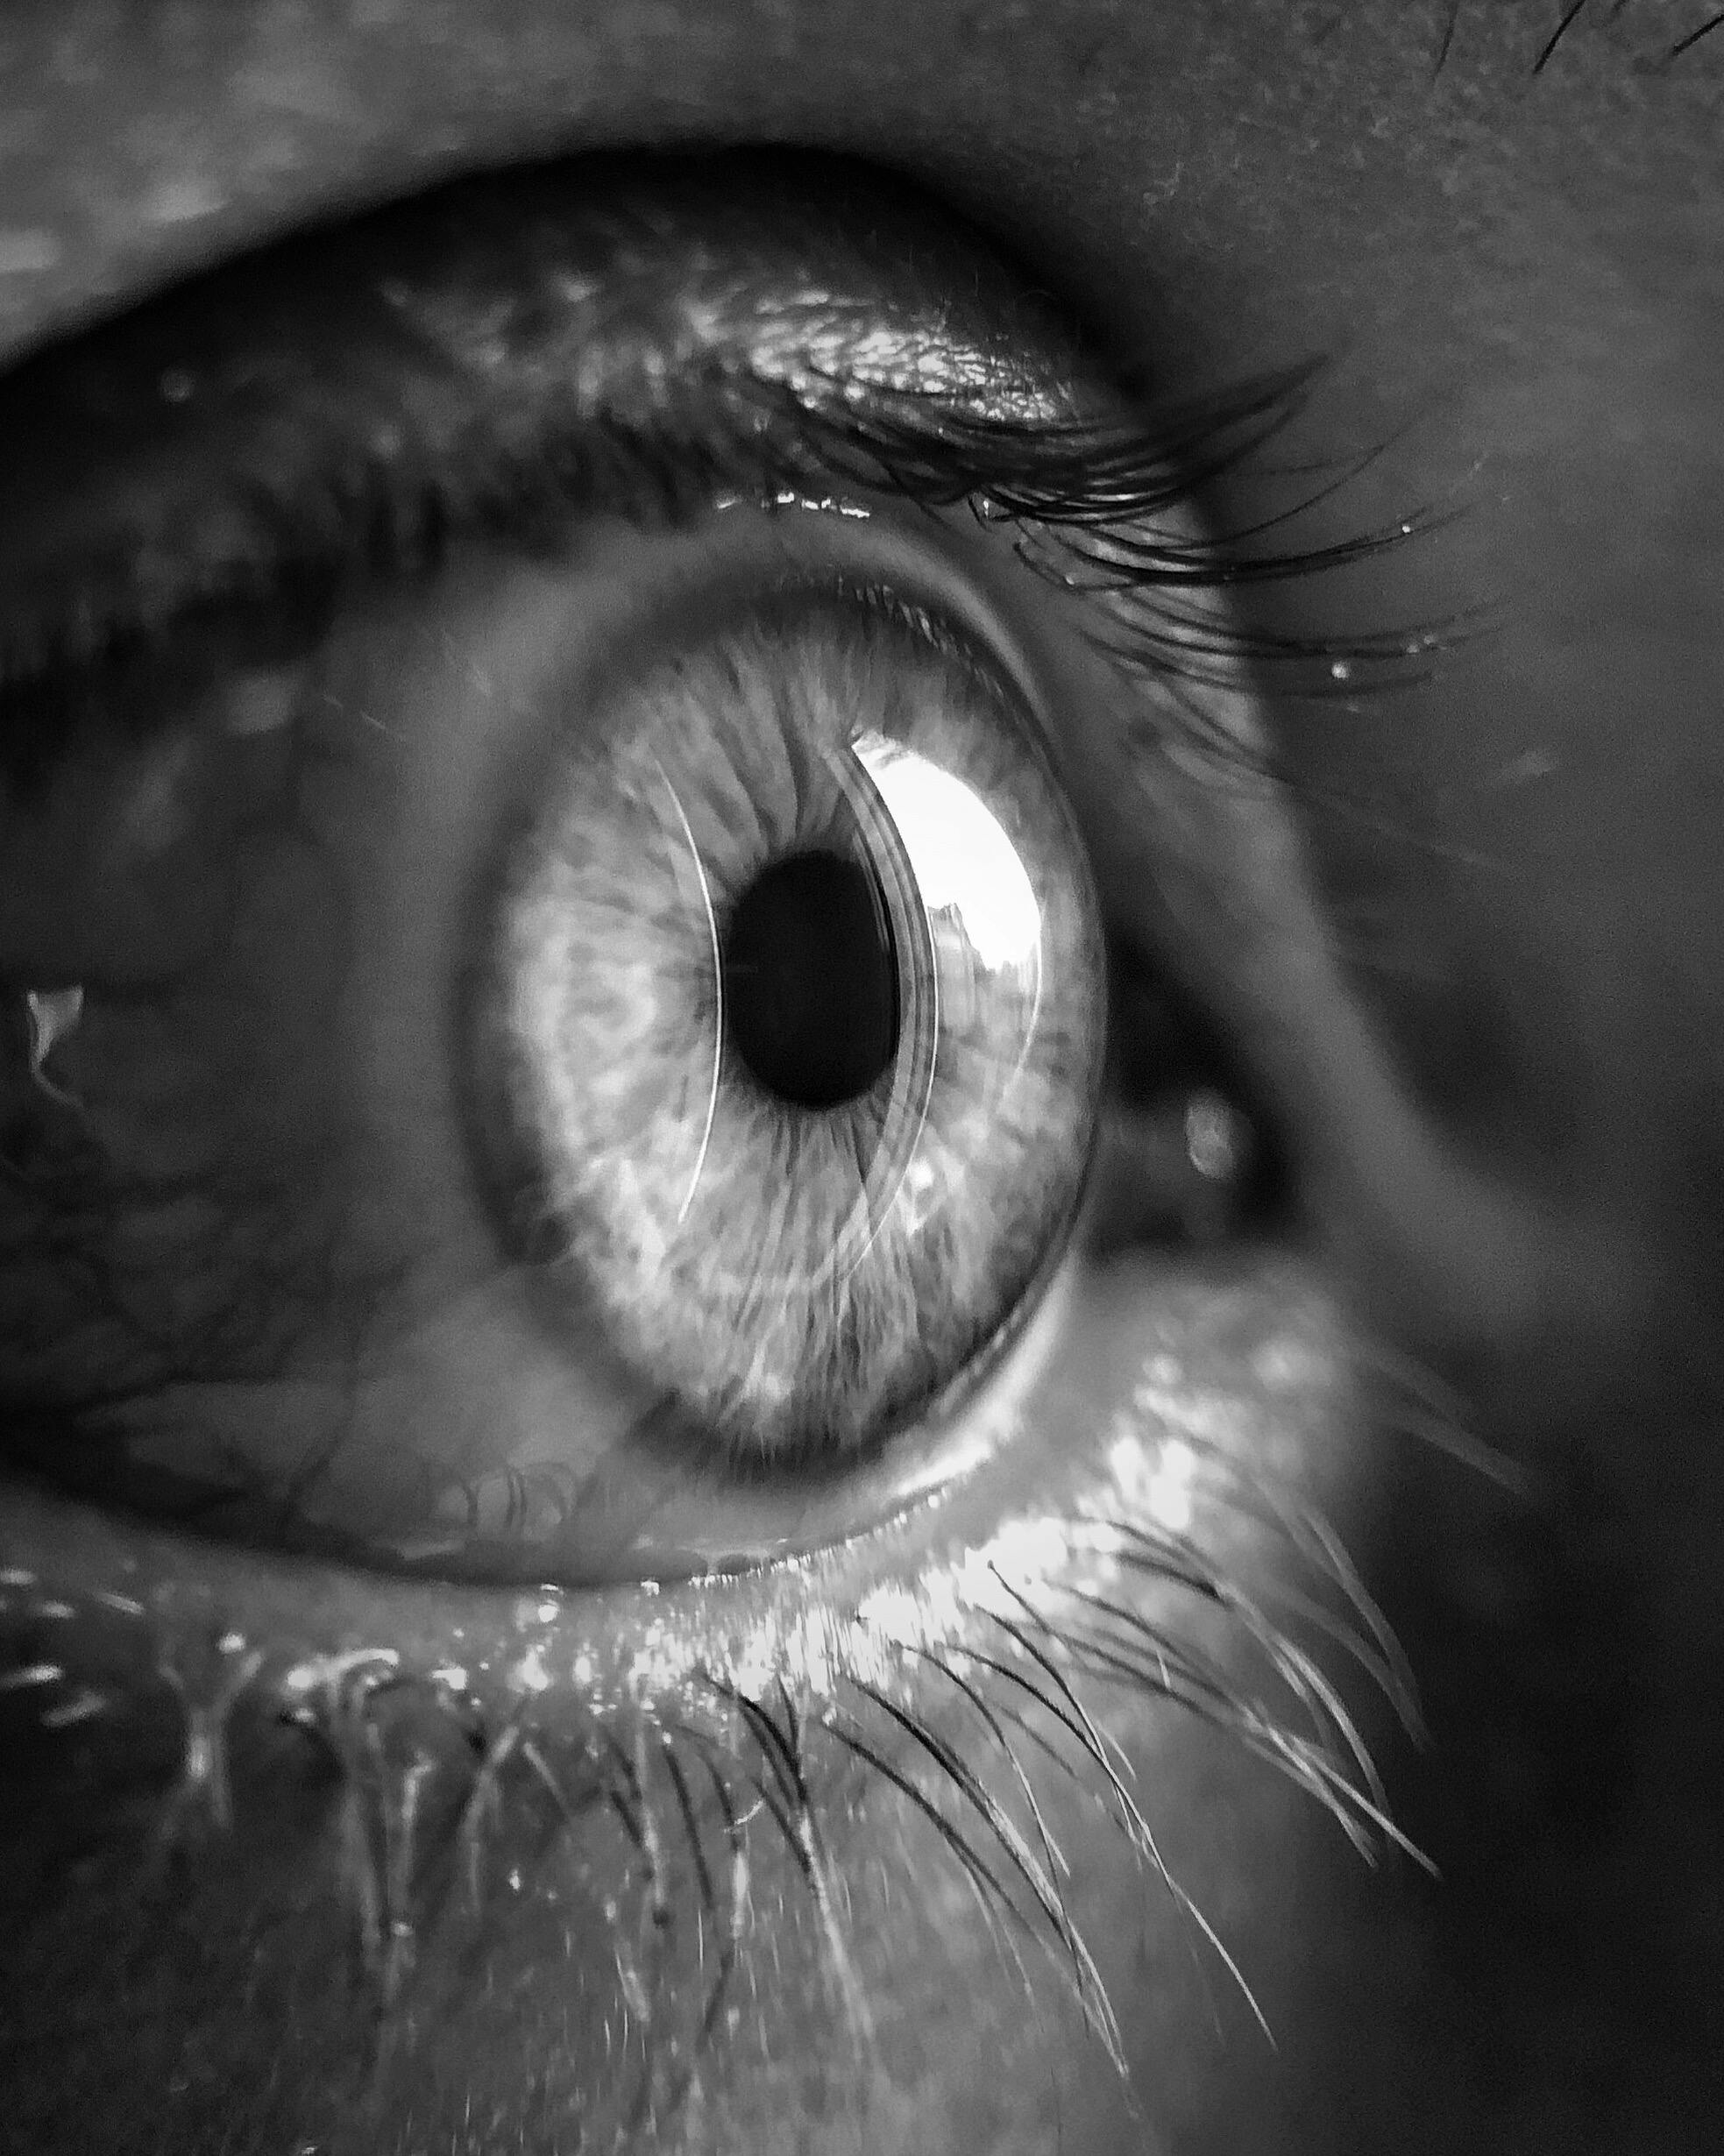 Grayscale Close-up Photo of Human Eye · Free Stock Photo